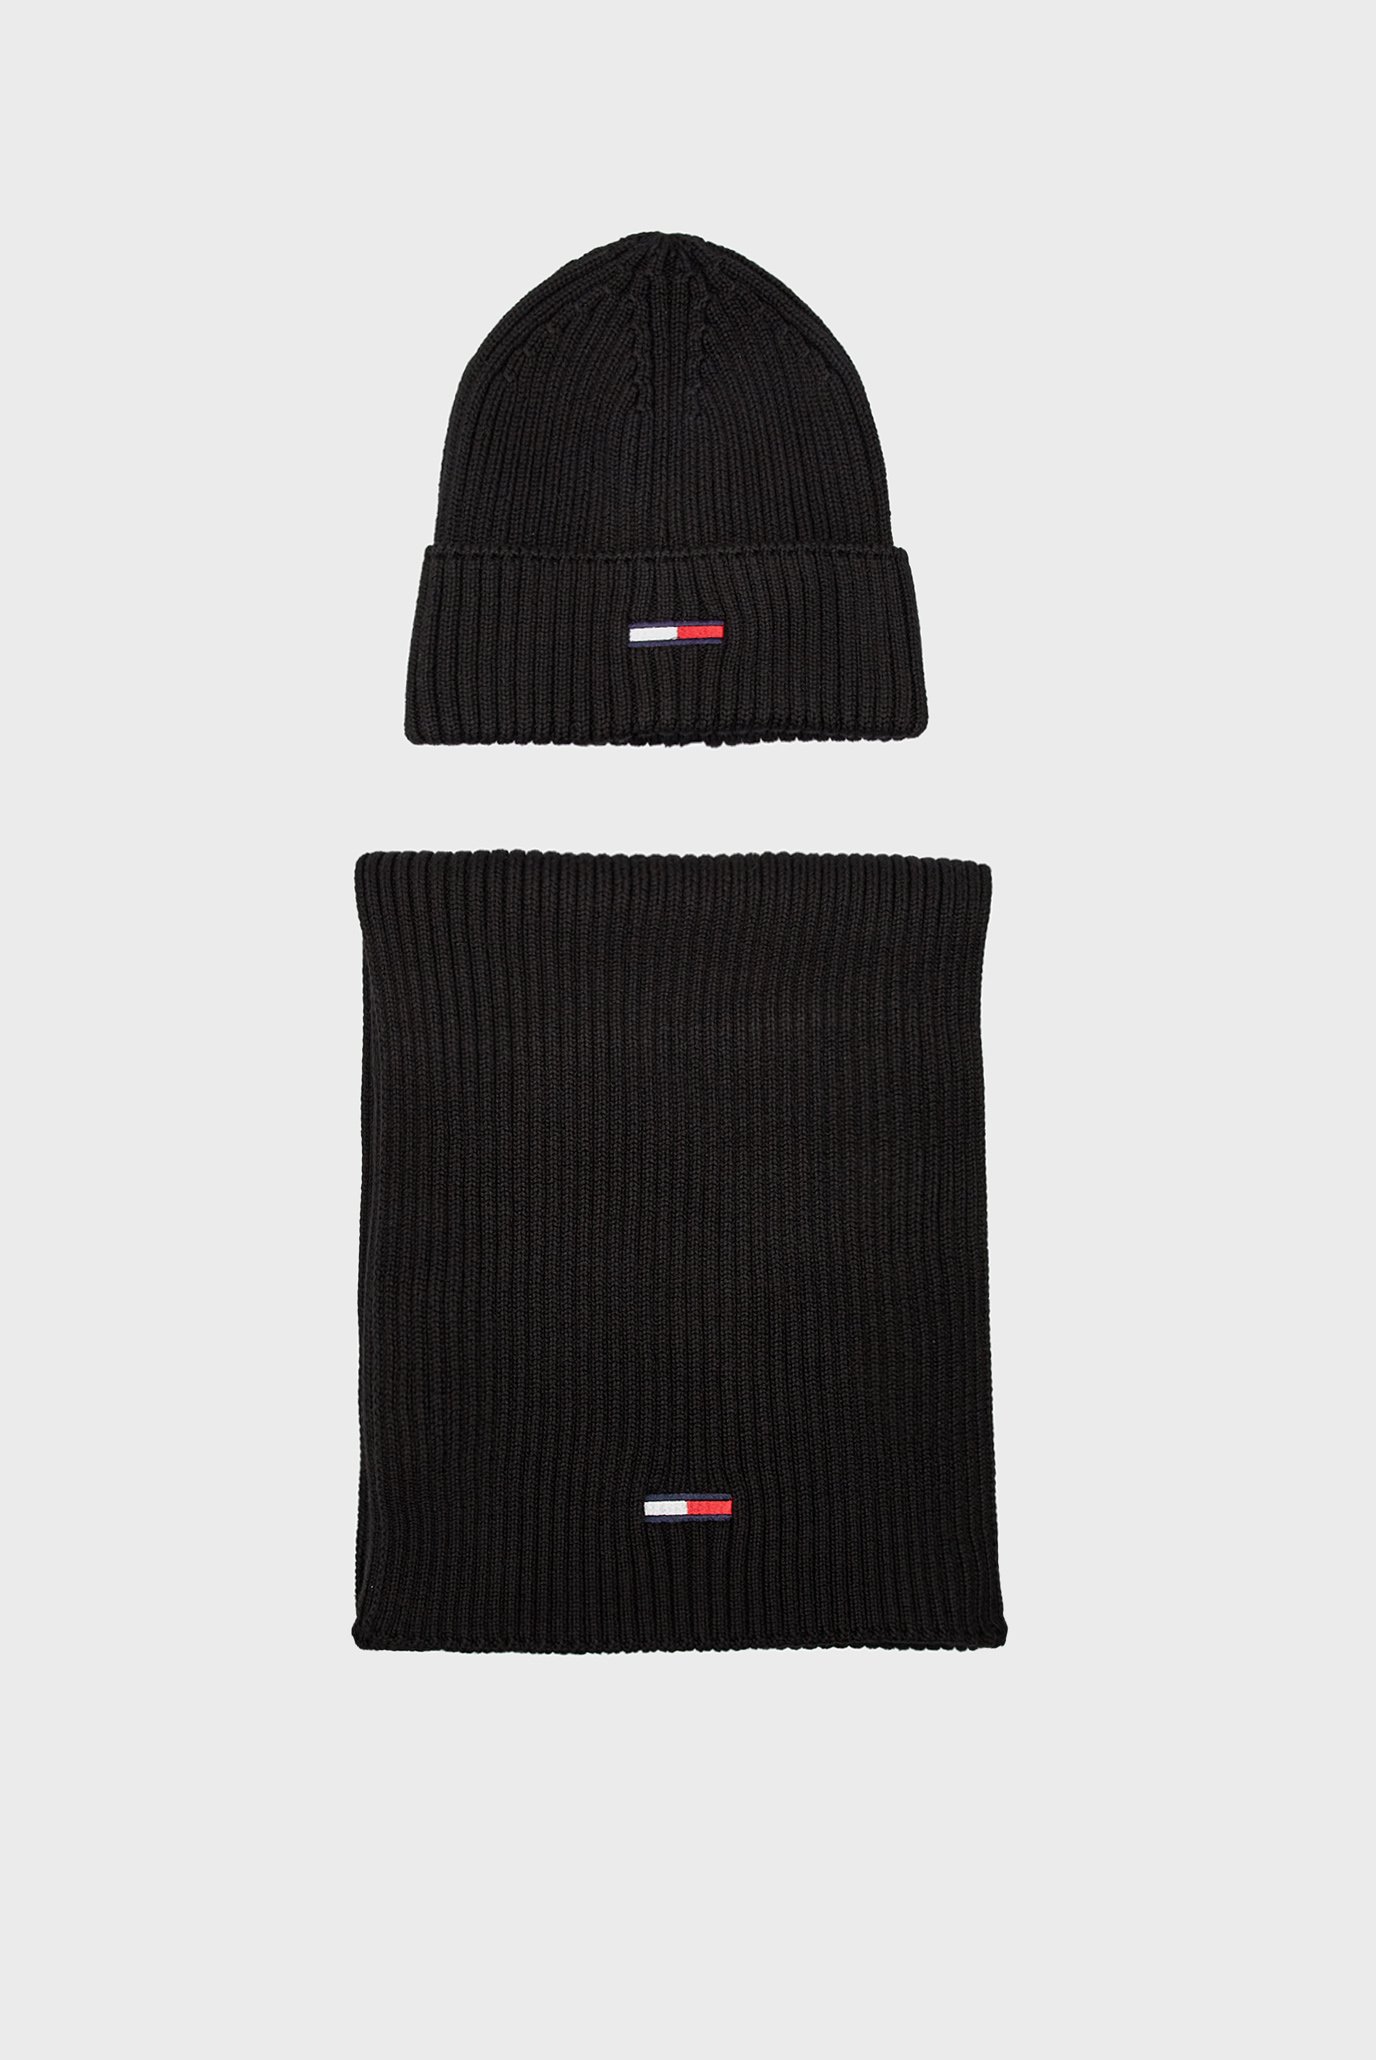 Мужской набор аксессуаров (шапка, шарф) TJM FLAG BEANIE & SCARF 1